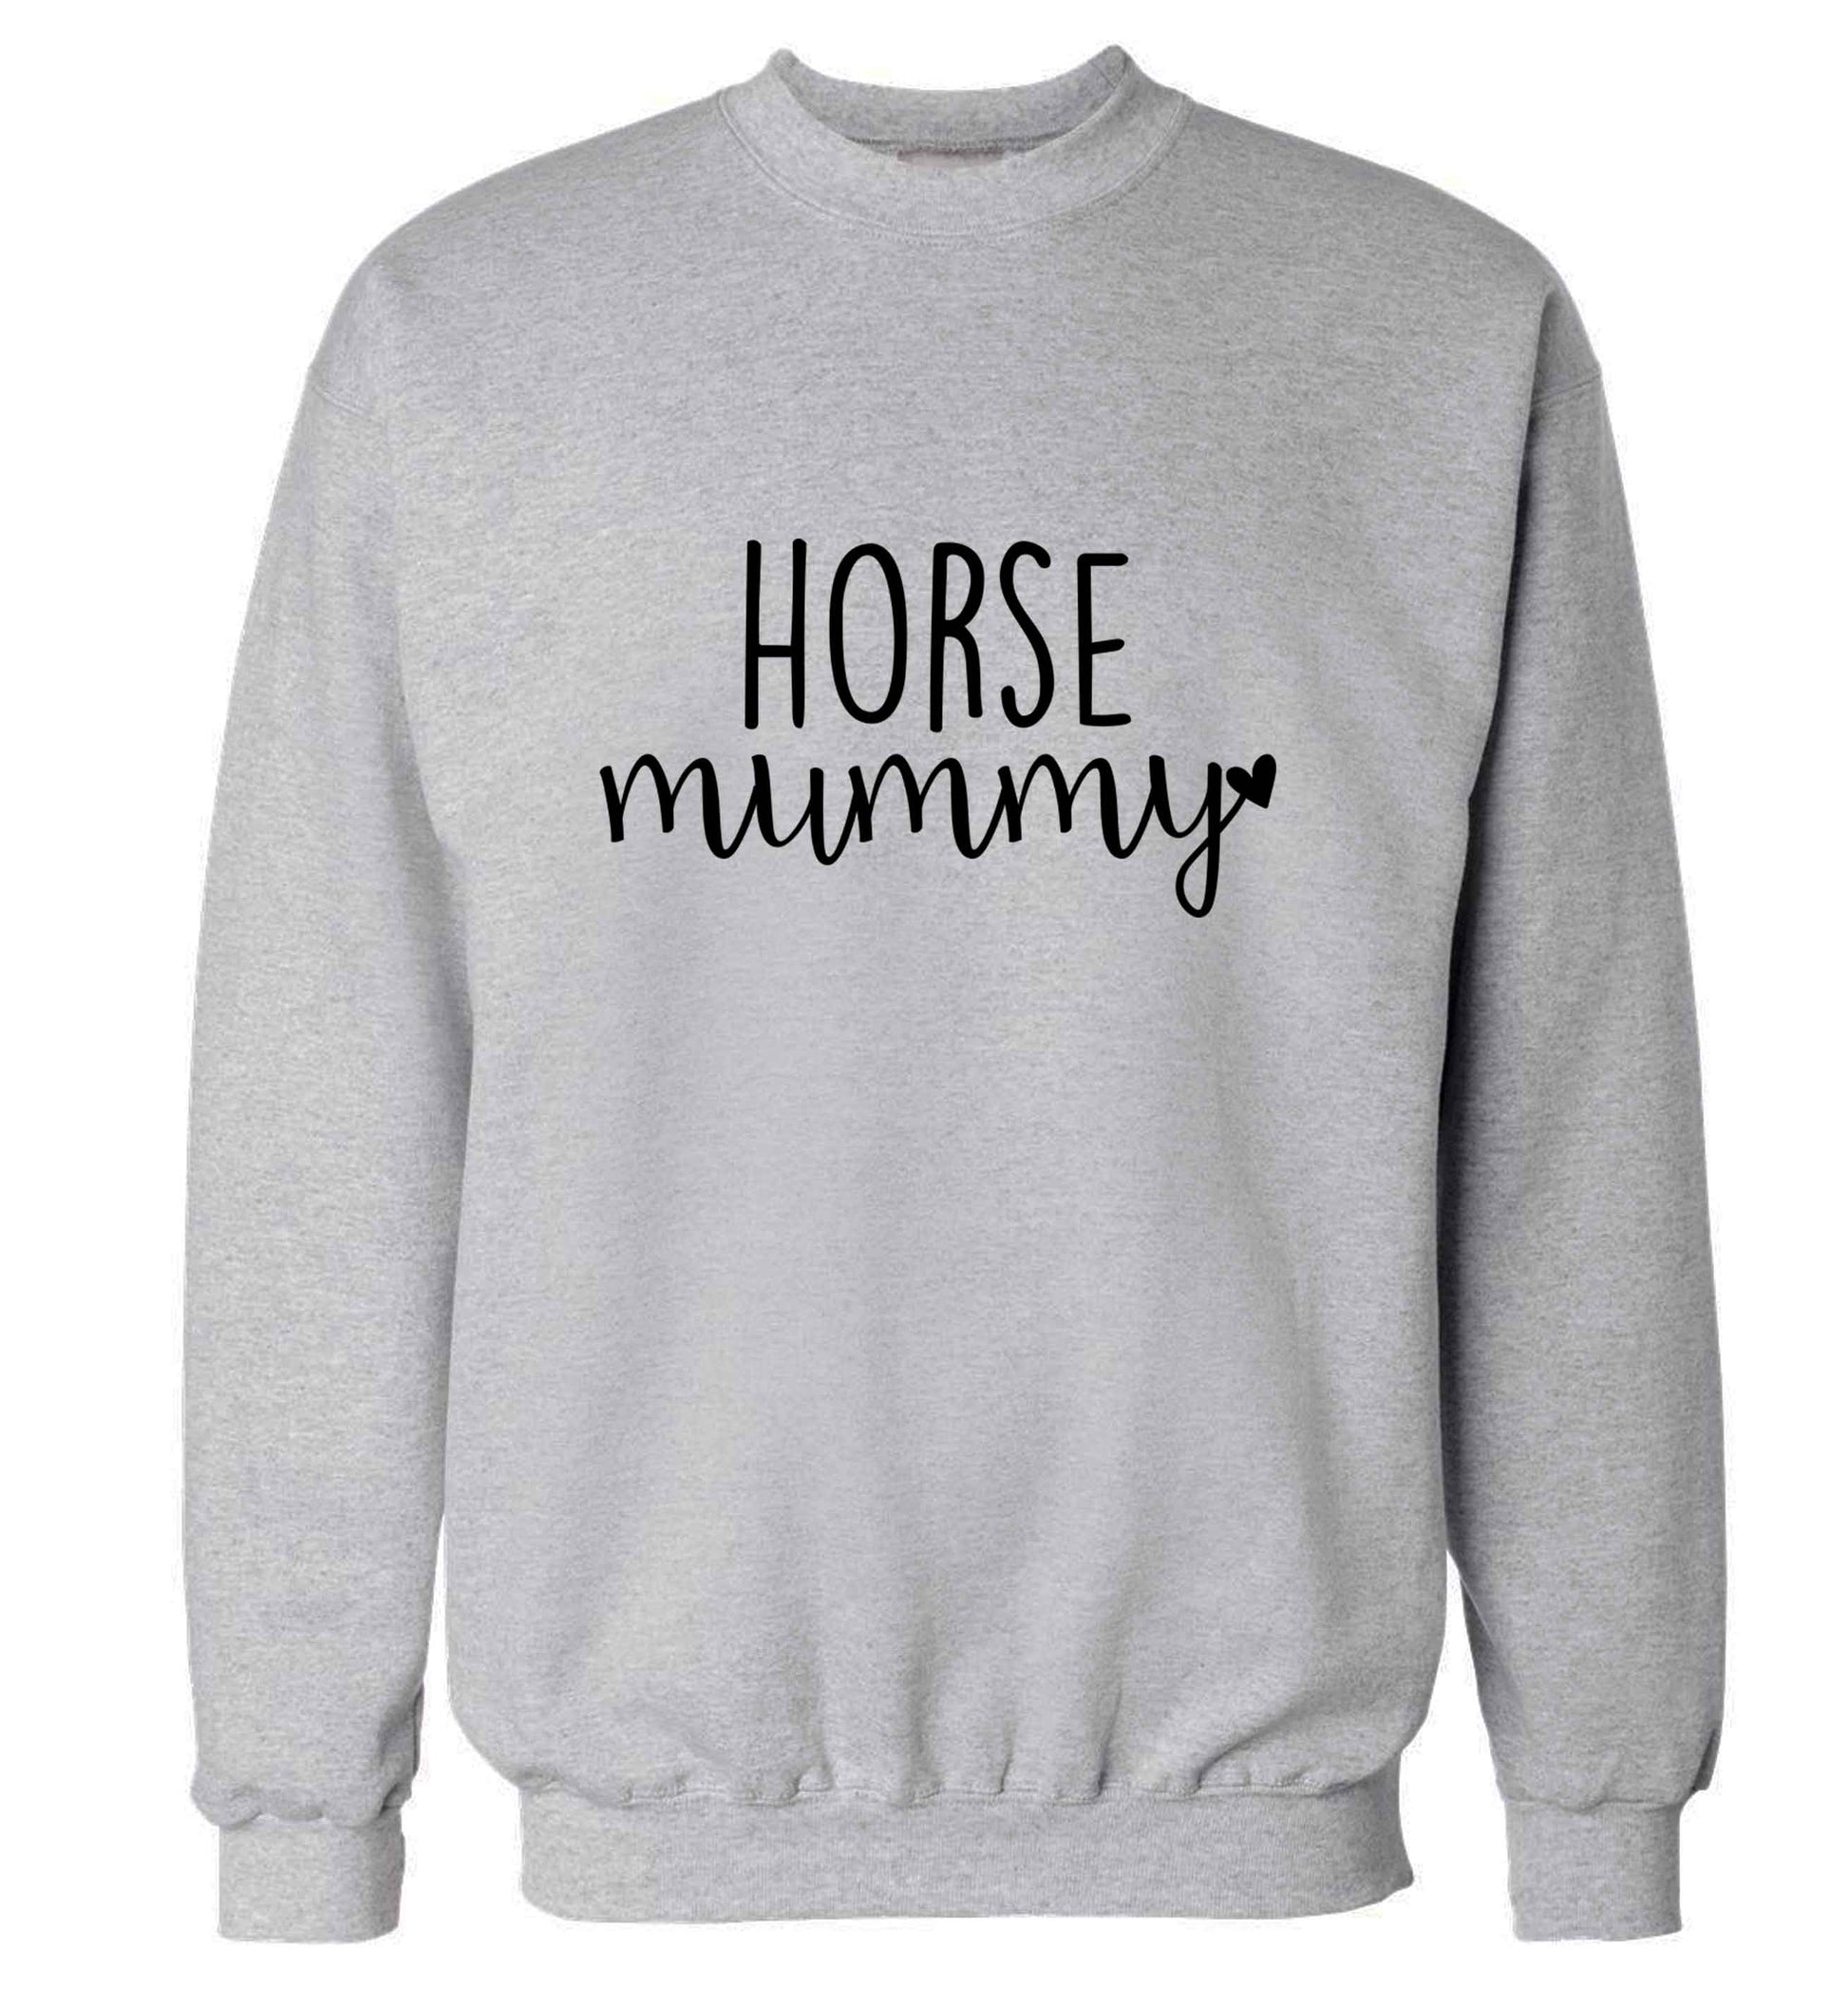 Horse mummy adult's unisex grey sweater 2XL